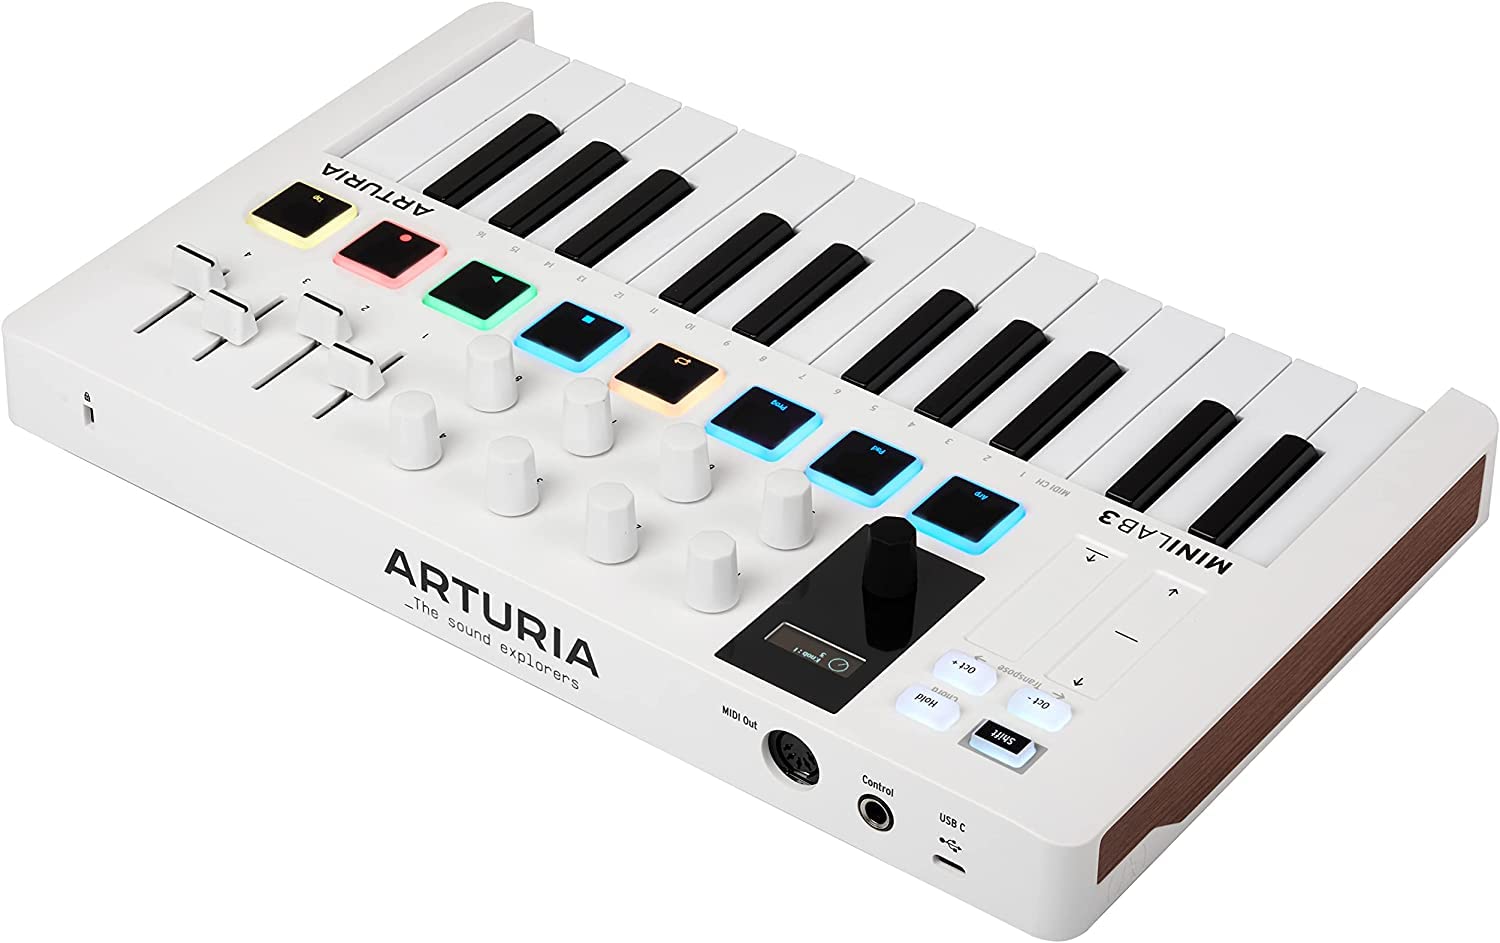 Arturia MiniLab 3 Hybrid MIDI Keyboard Controller Bundle w/ Samson SR350 Pro Headphones, Arturia USB Cable & Liquid Audio Polishing Cloth (4 Items)